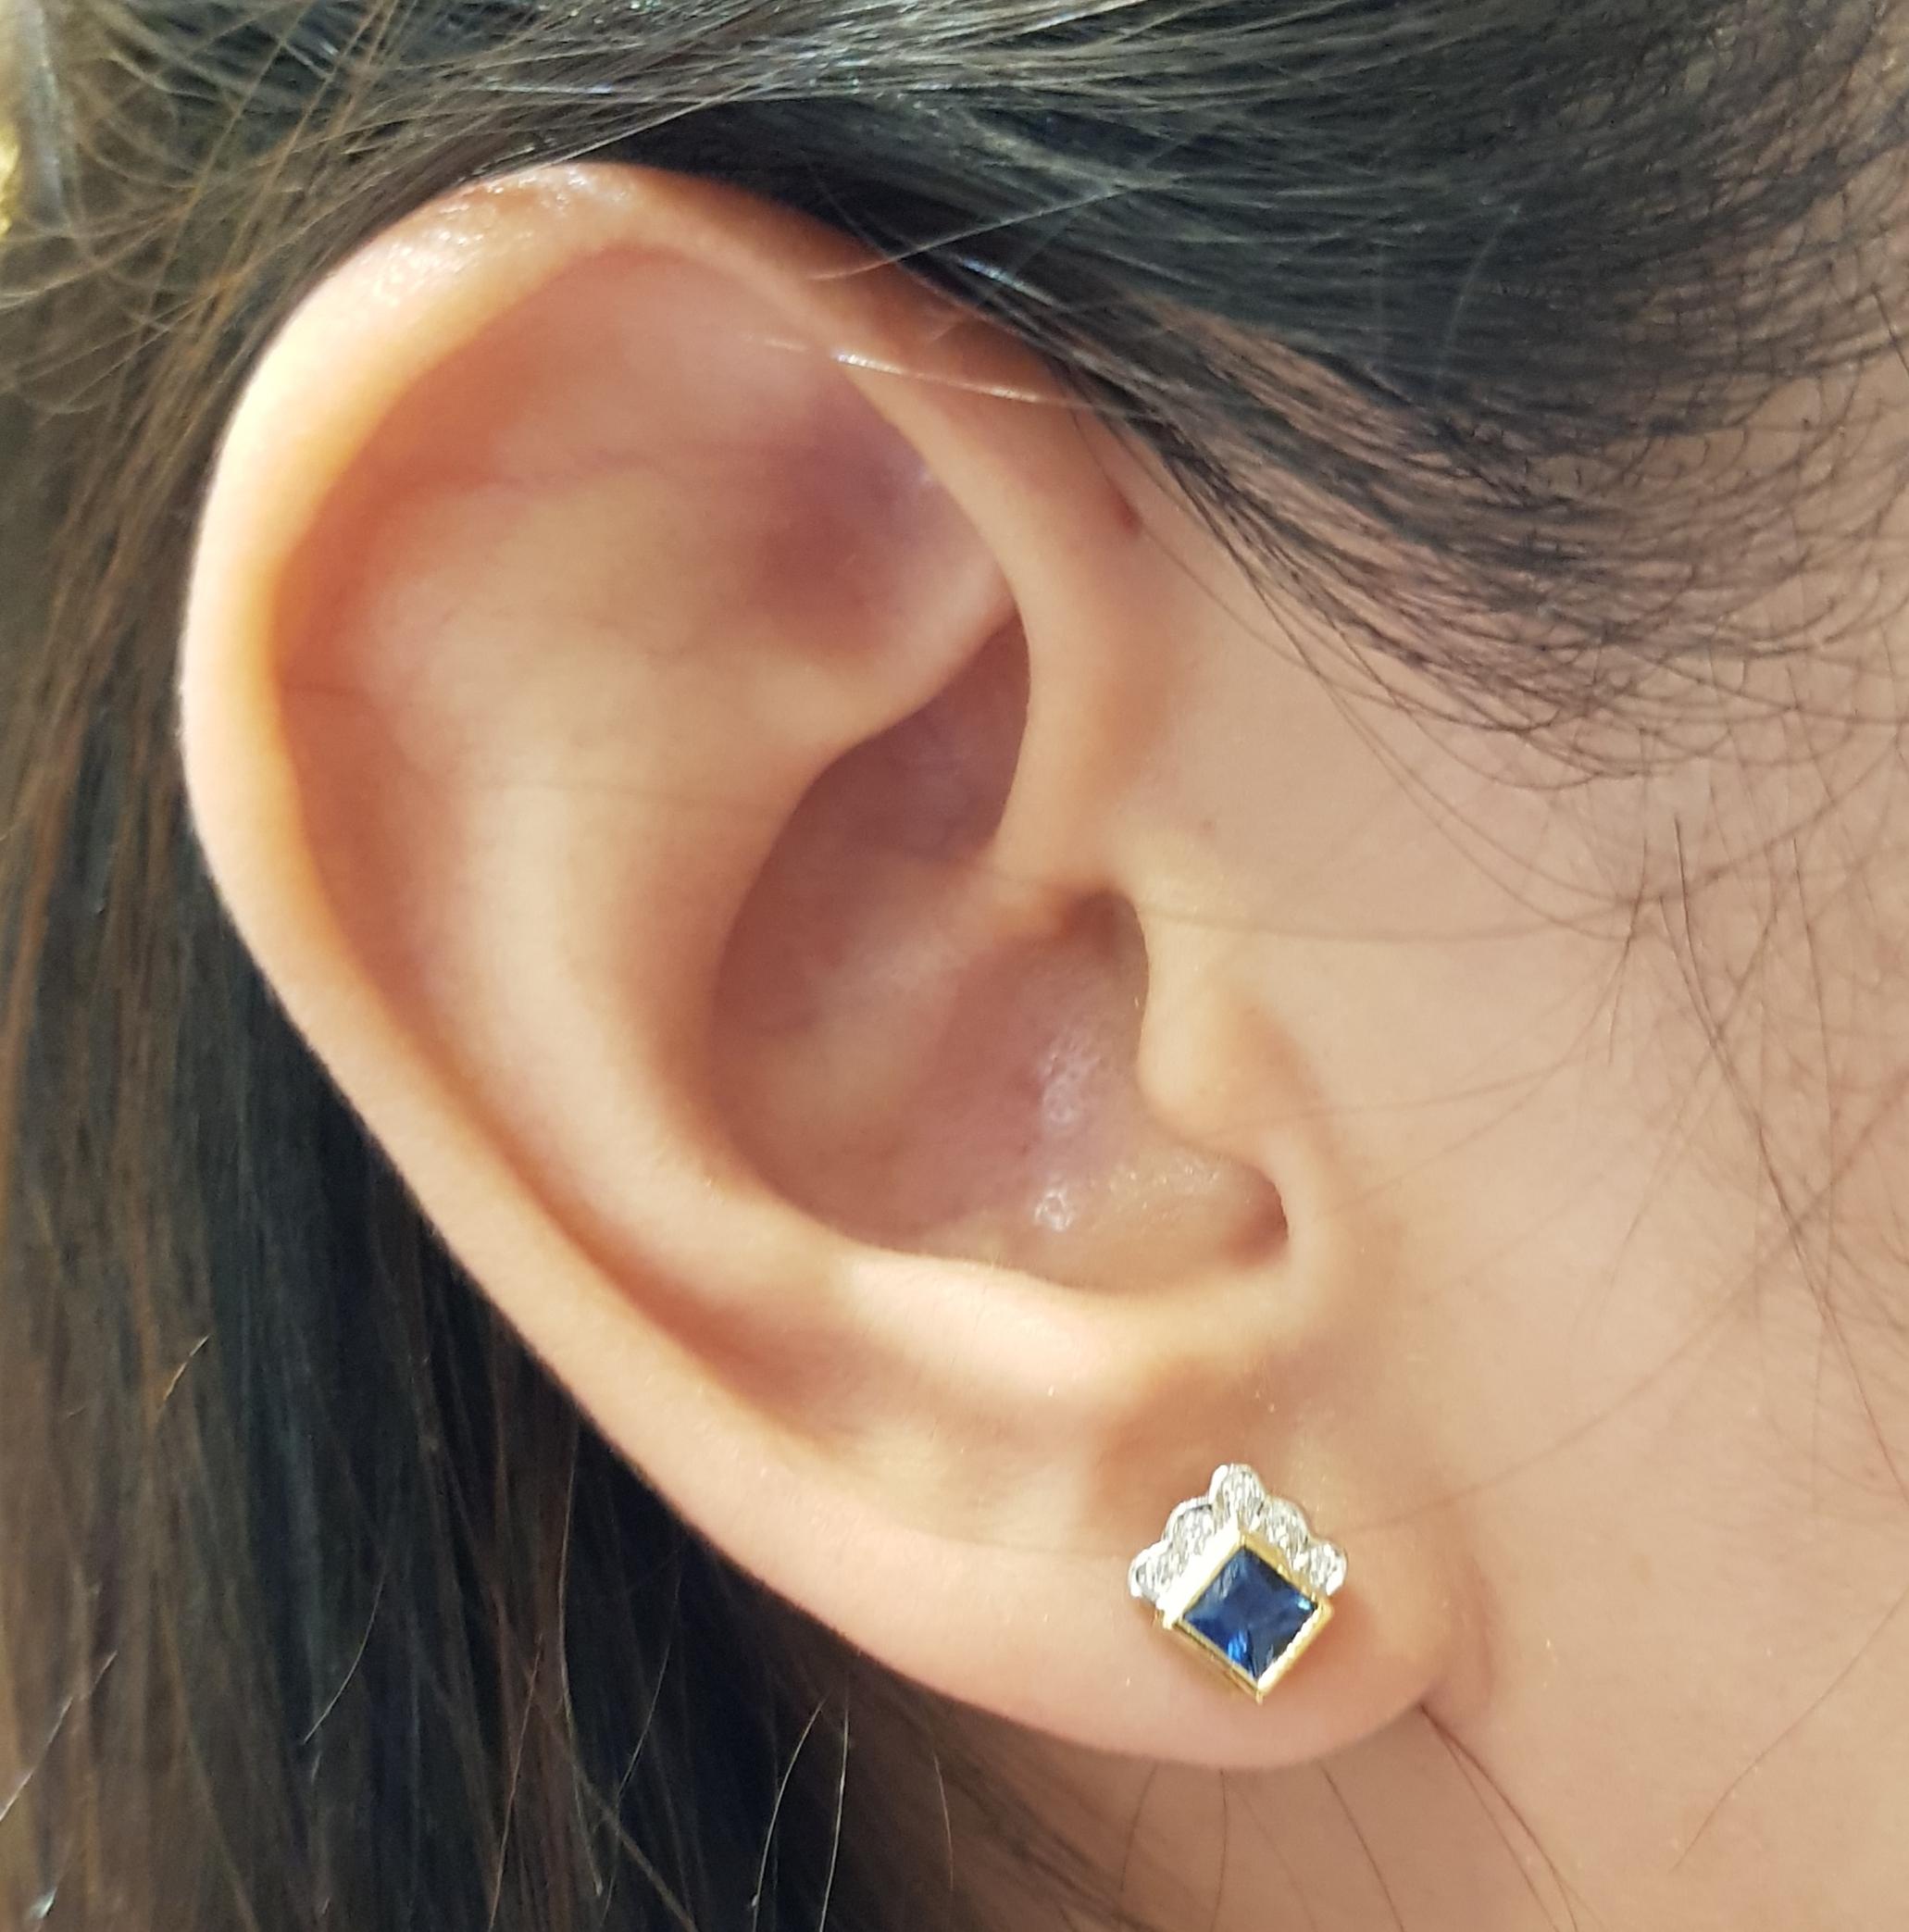 Blue Sapphire 0.57 carat with Diamond 0.07 carat Earrings set in 18 Karat Gold Settings

Width:  0.8 cm 
Length:  0.8 cm
Total Weight: 1.89 grams

